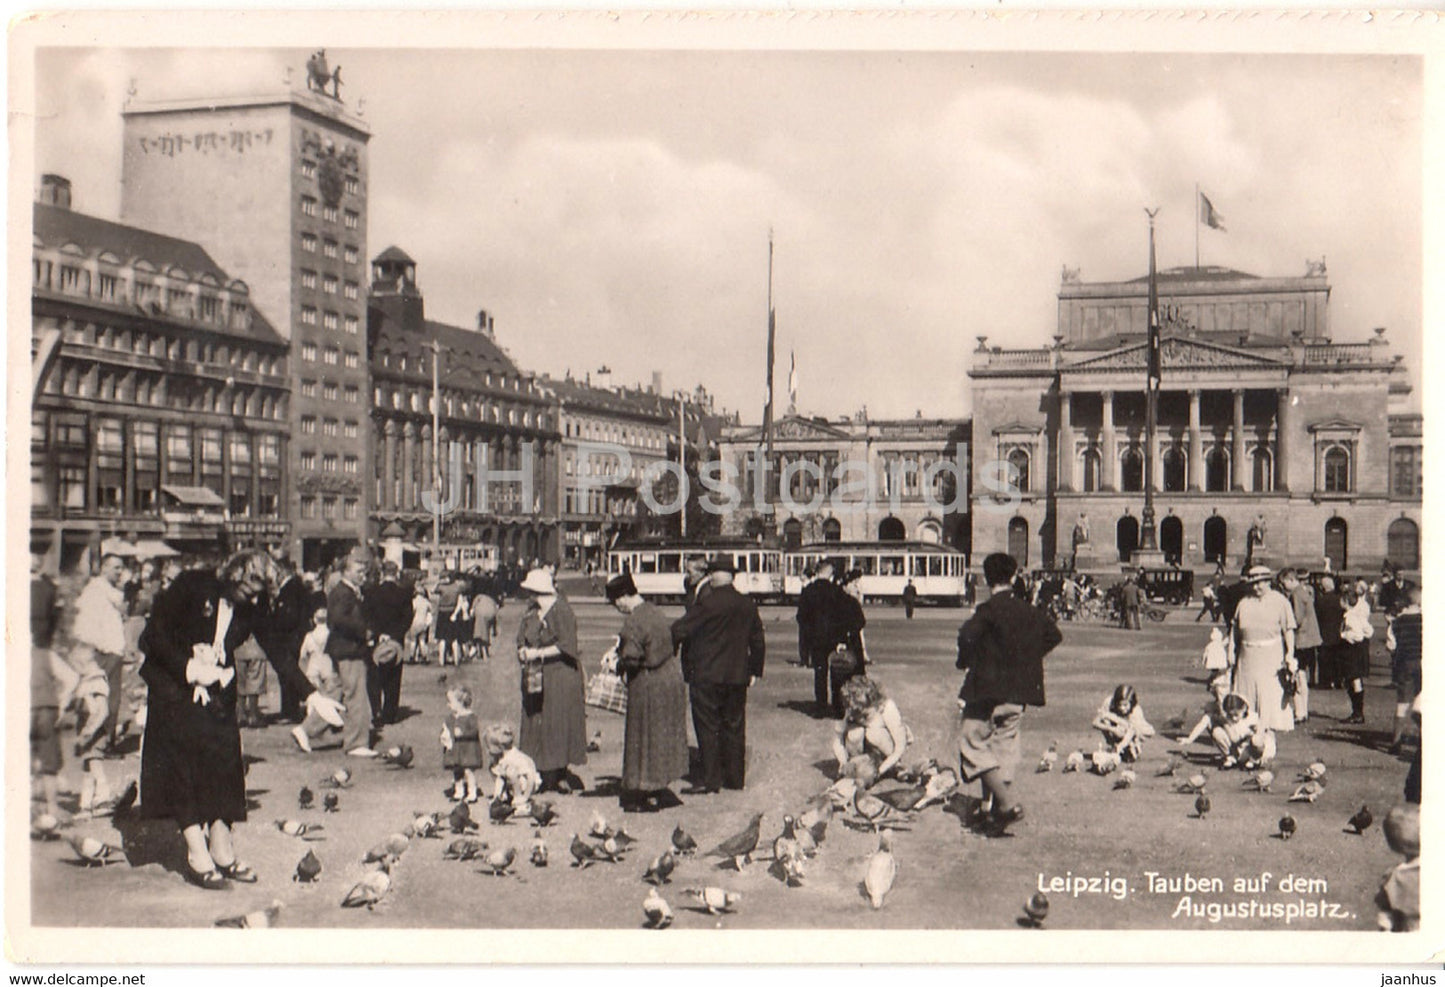 Leipzig - Tauben auf dem Augustusplatz - tram - old postcard - Germany - unused - JH Postcards